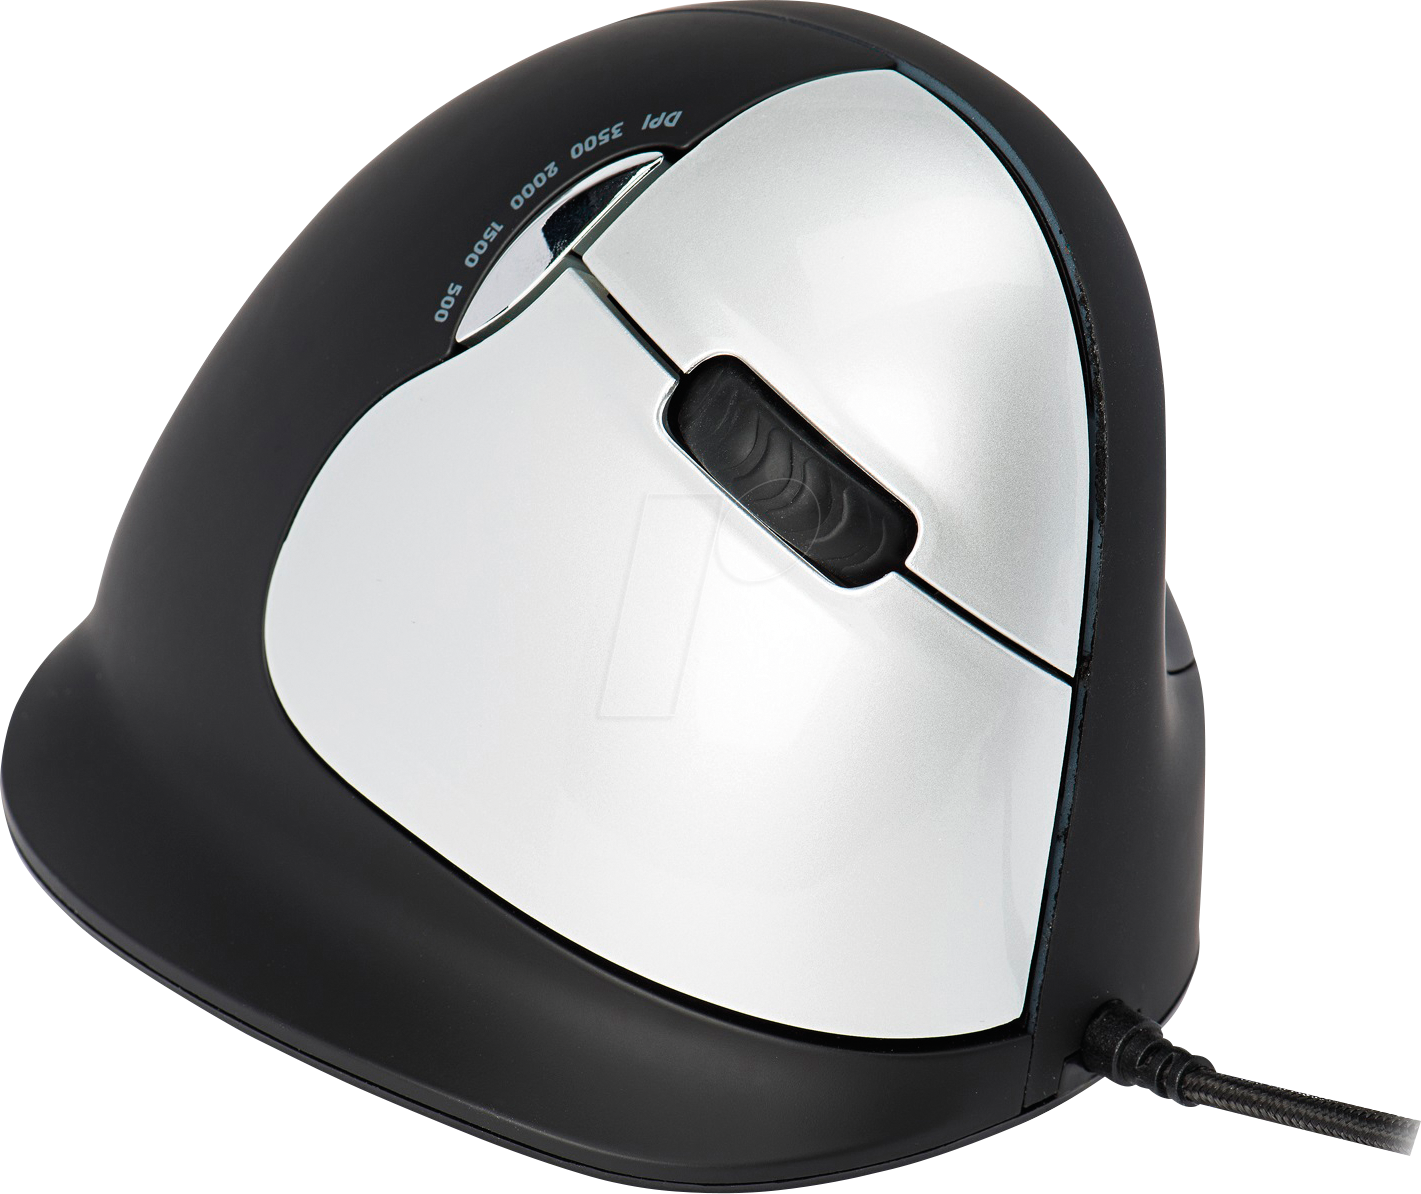 R-GO BRHEMLR - Maus (Mouse), USB, vertikal, Rechtshänder, M-L von R-Go Tools